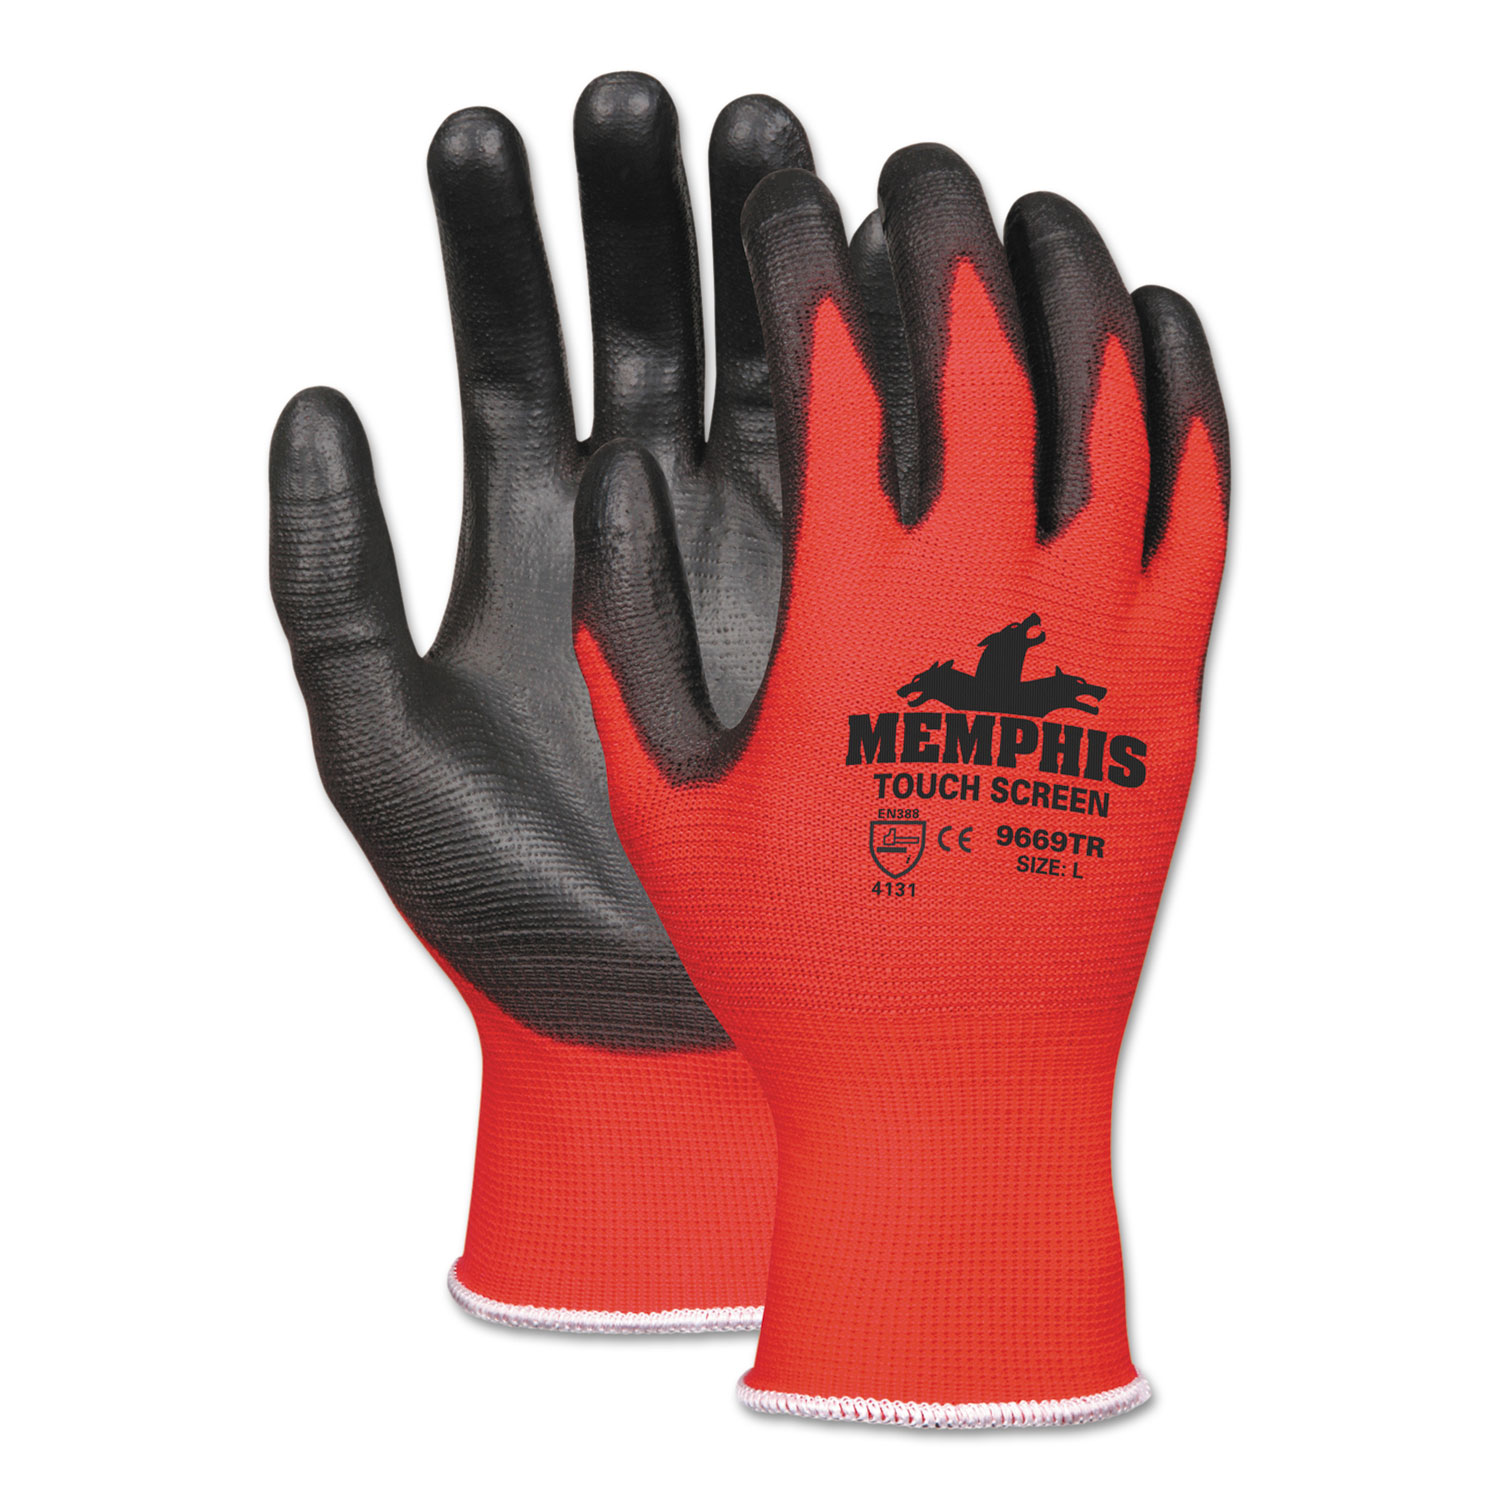 Touch Screen Nylon/Polyurethane Gloves, Black/Red, Large